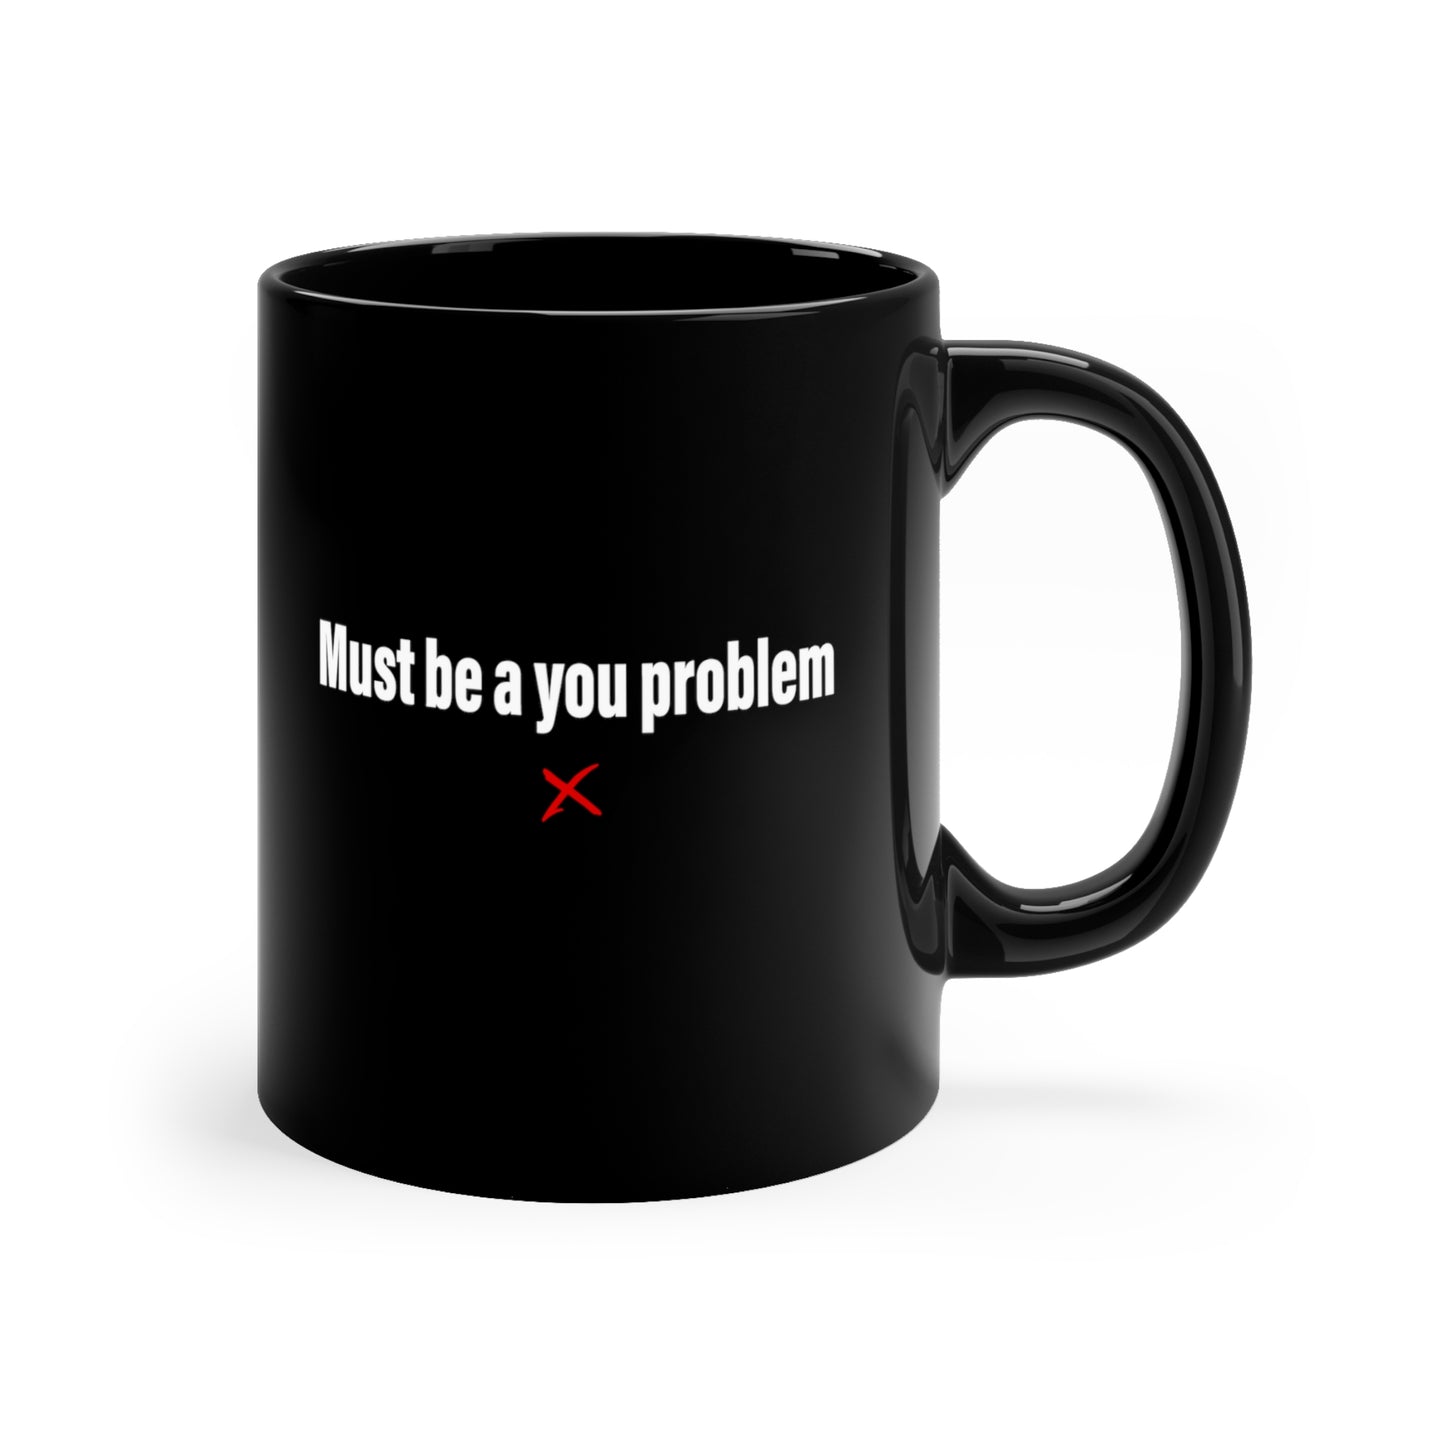 Must be a you problem - Mug